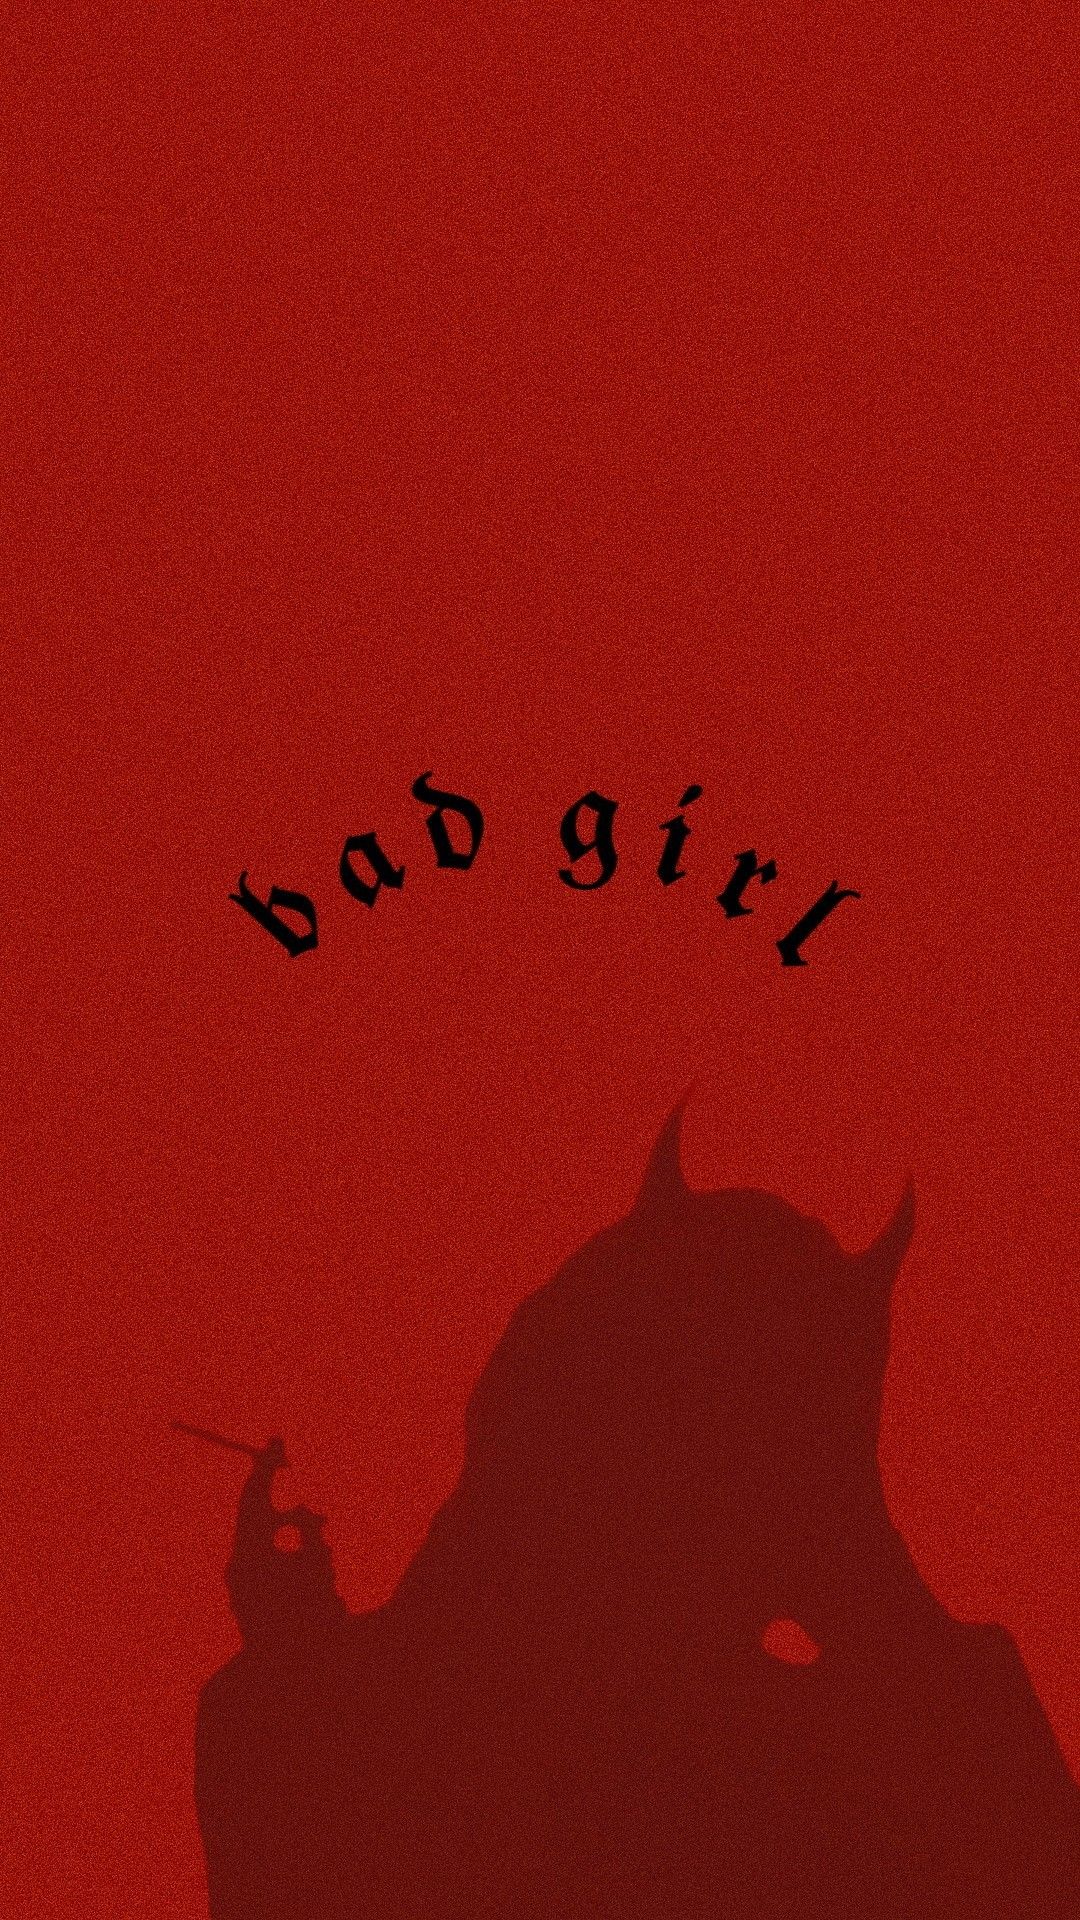 ABN. Bad girl wallpaper, Edgy